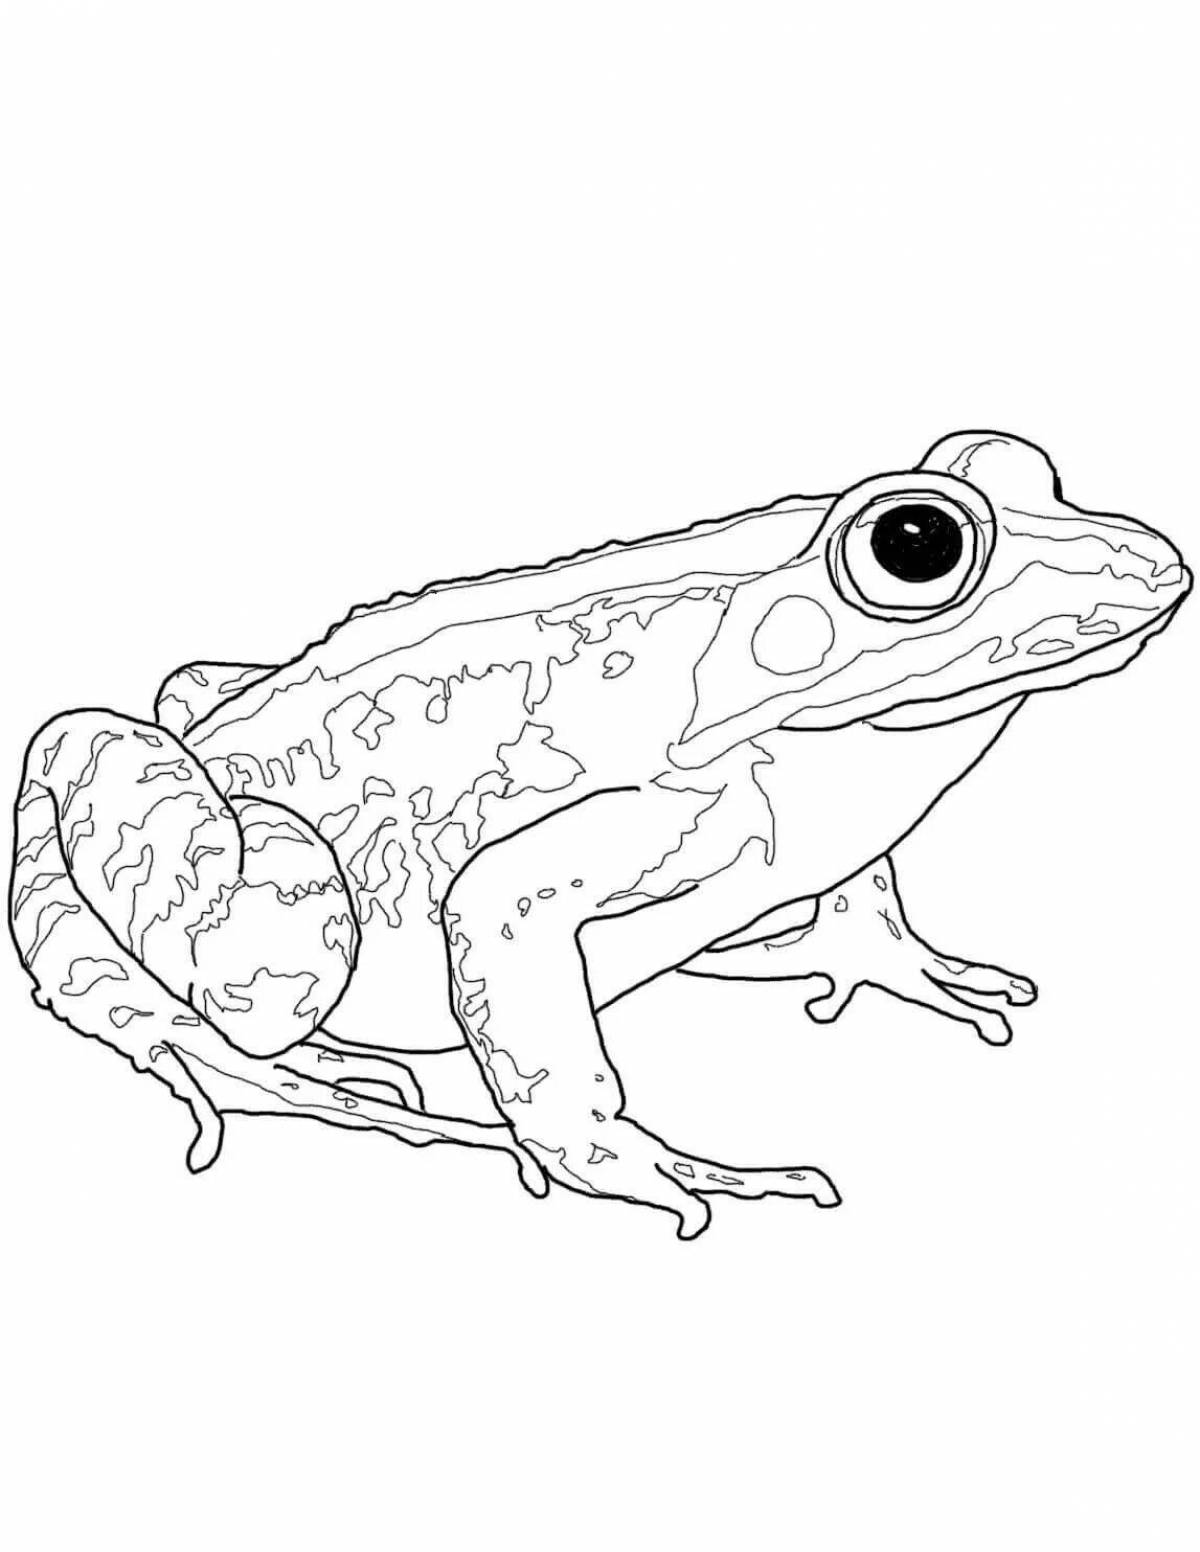 Dart frog deluxe coloring book